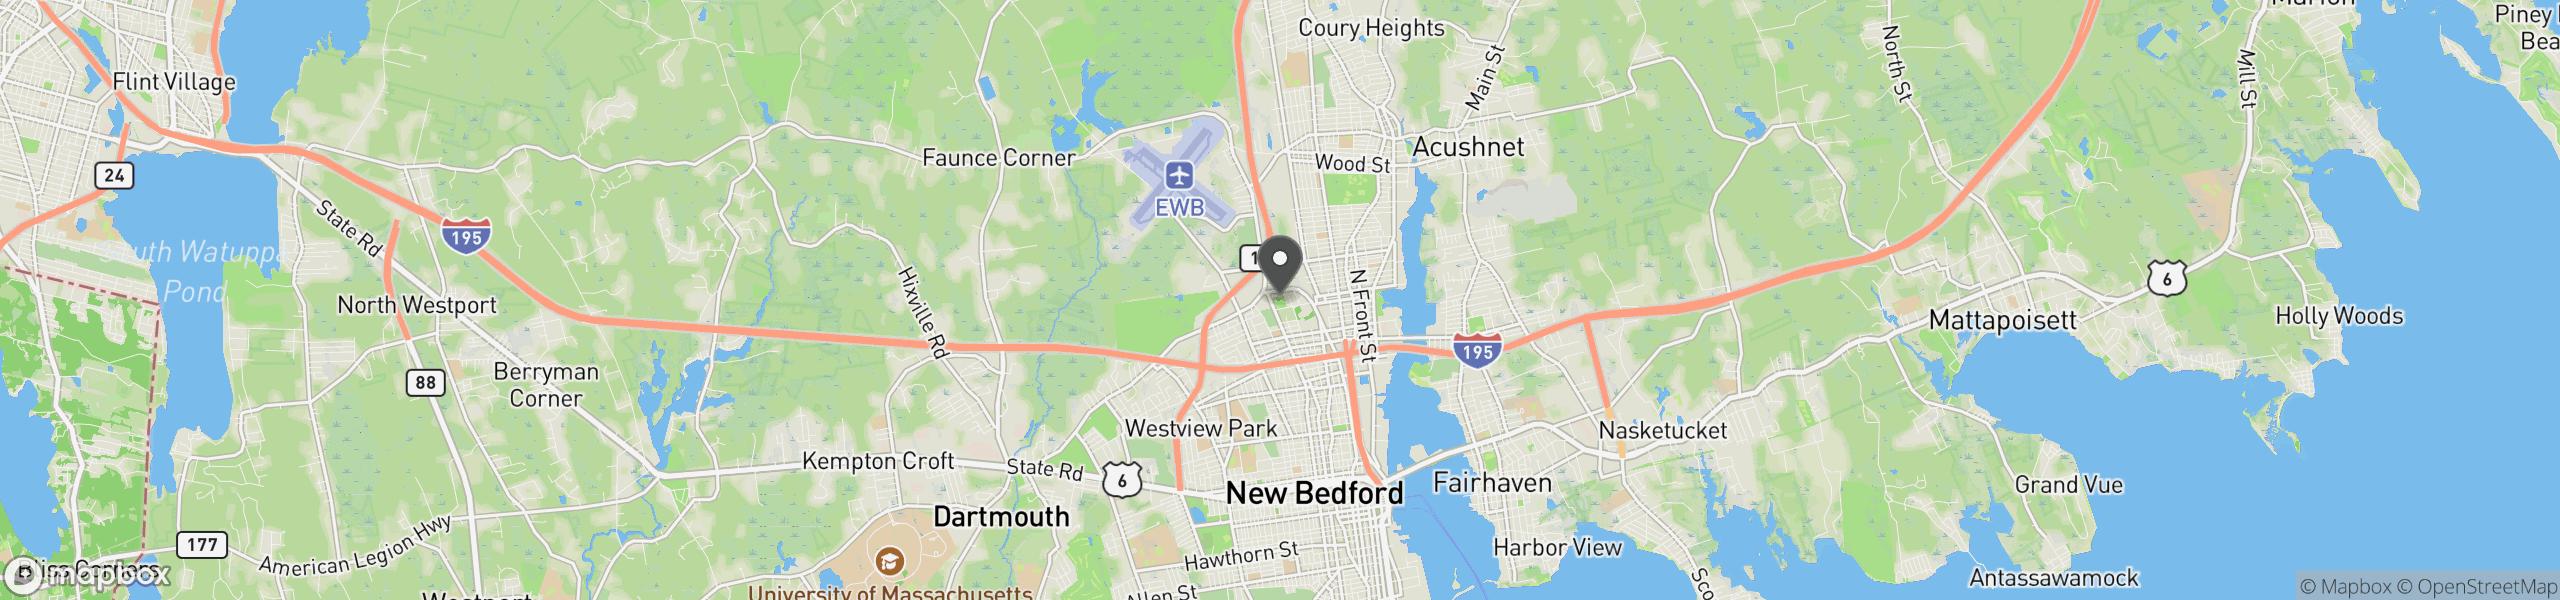 New Bedford, MA 02746